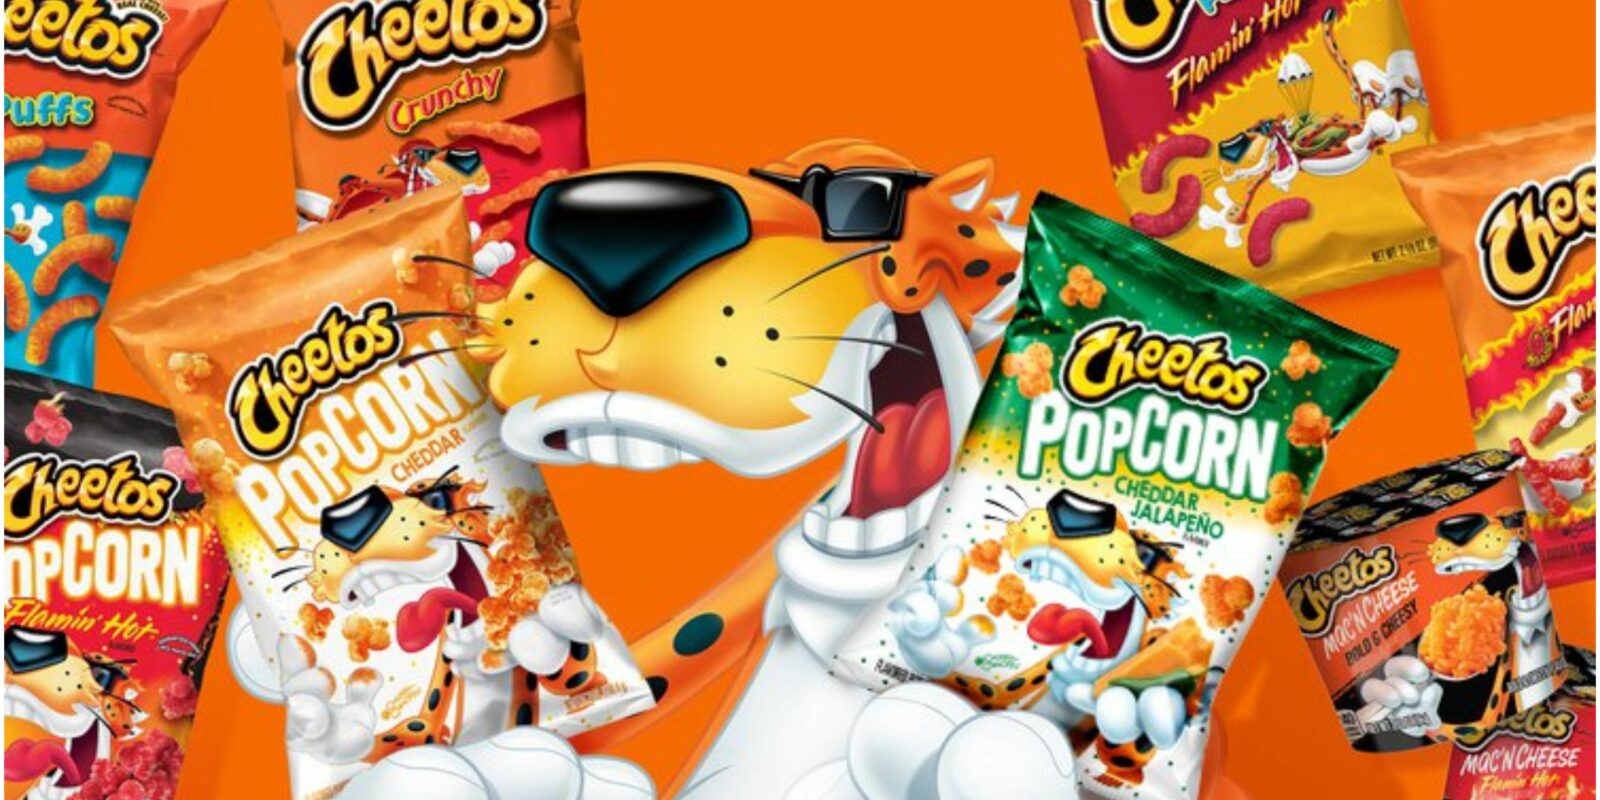 Cheetos Crunchy Flamin Hot 226G AMERICAN SNACKS - XMANIA Ireland 7